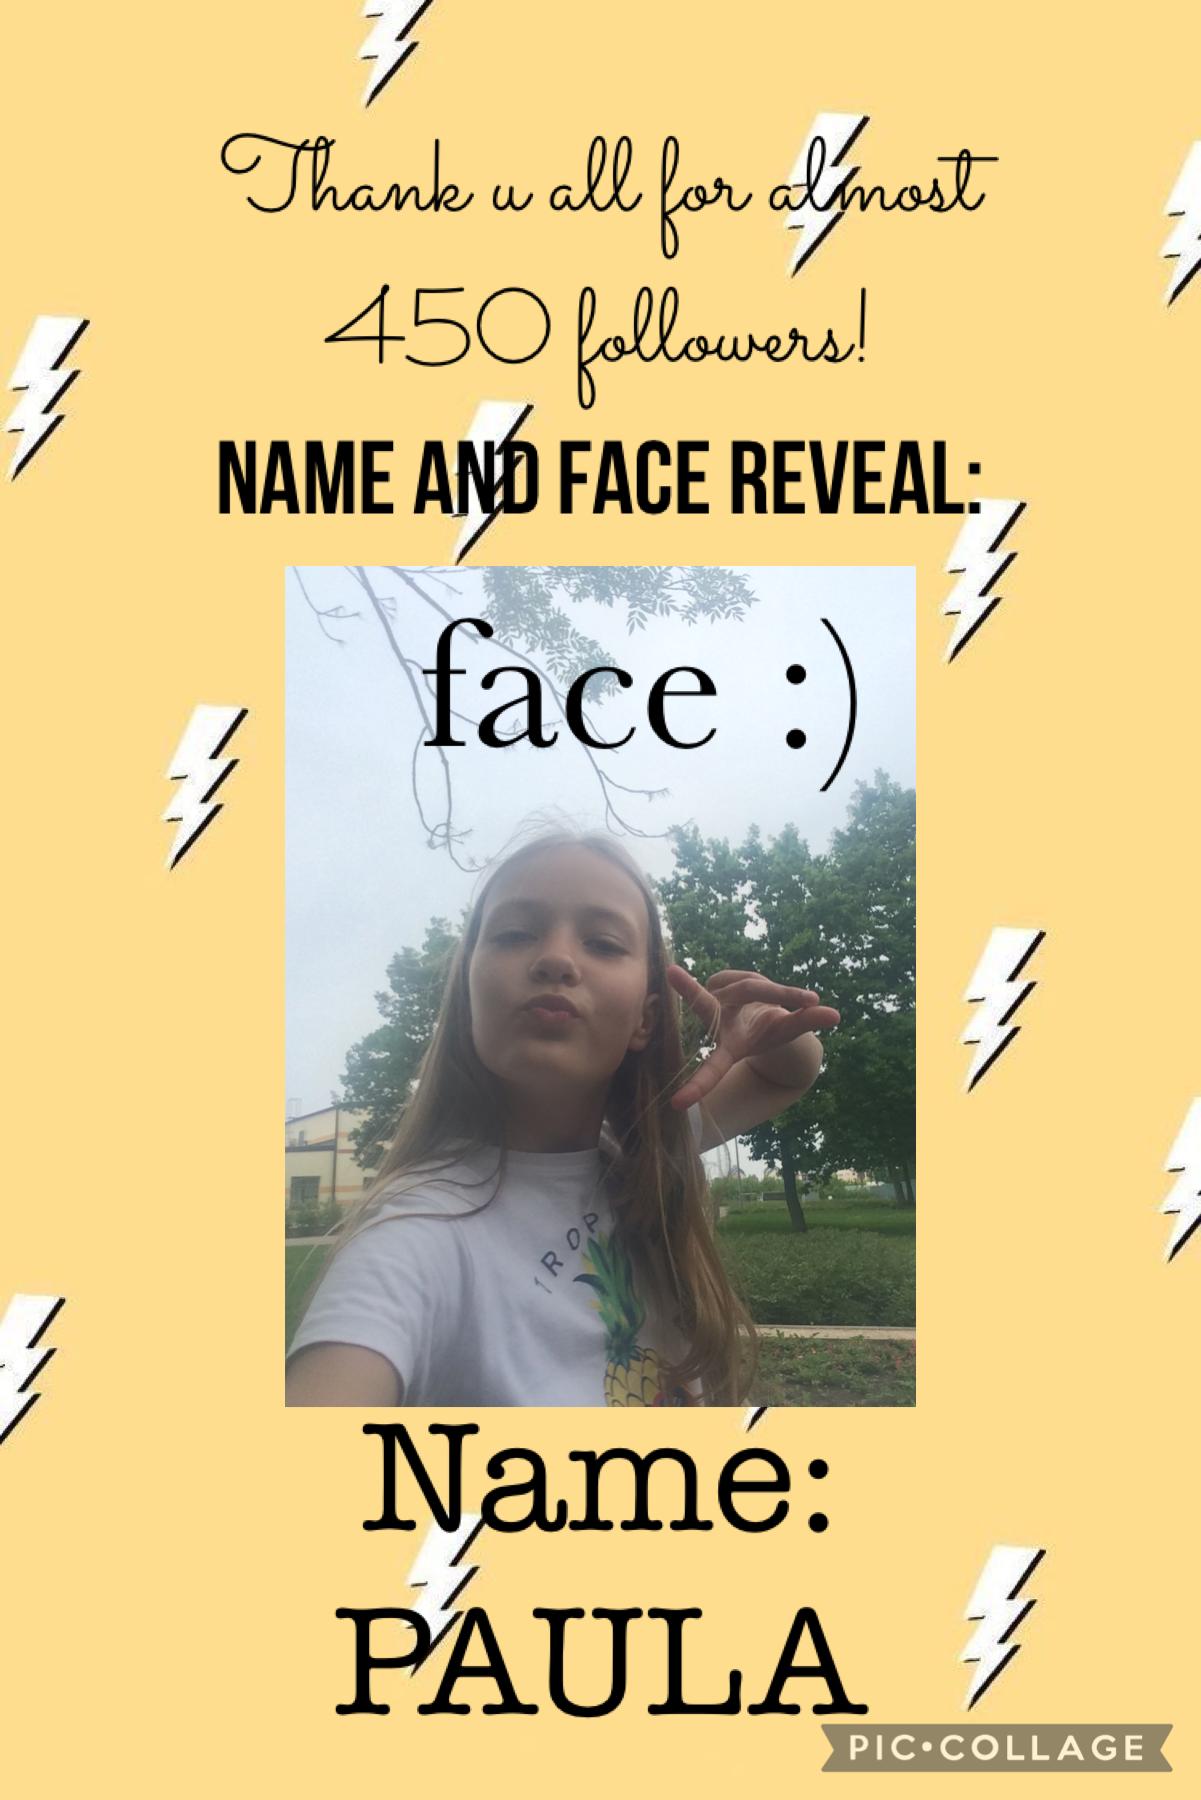 Do u like my name and face??